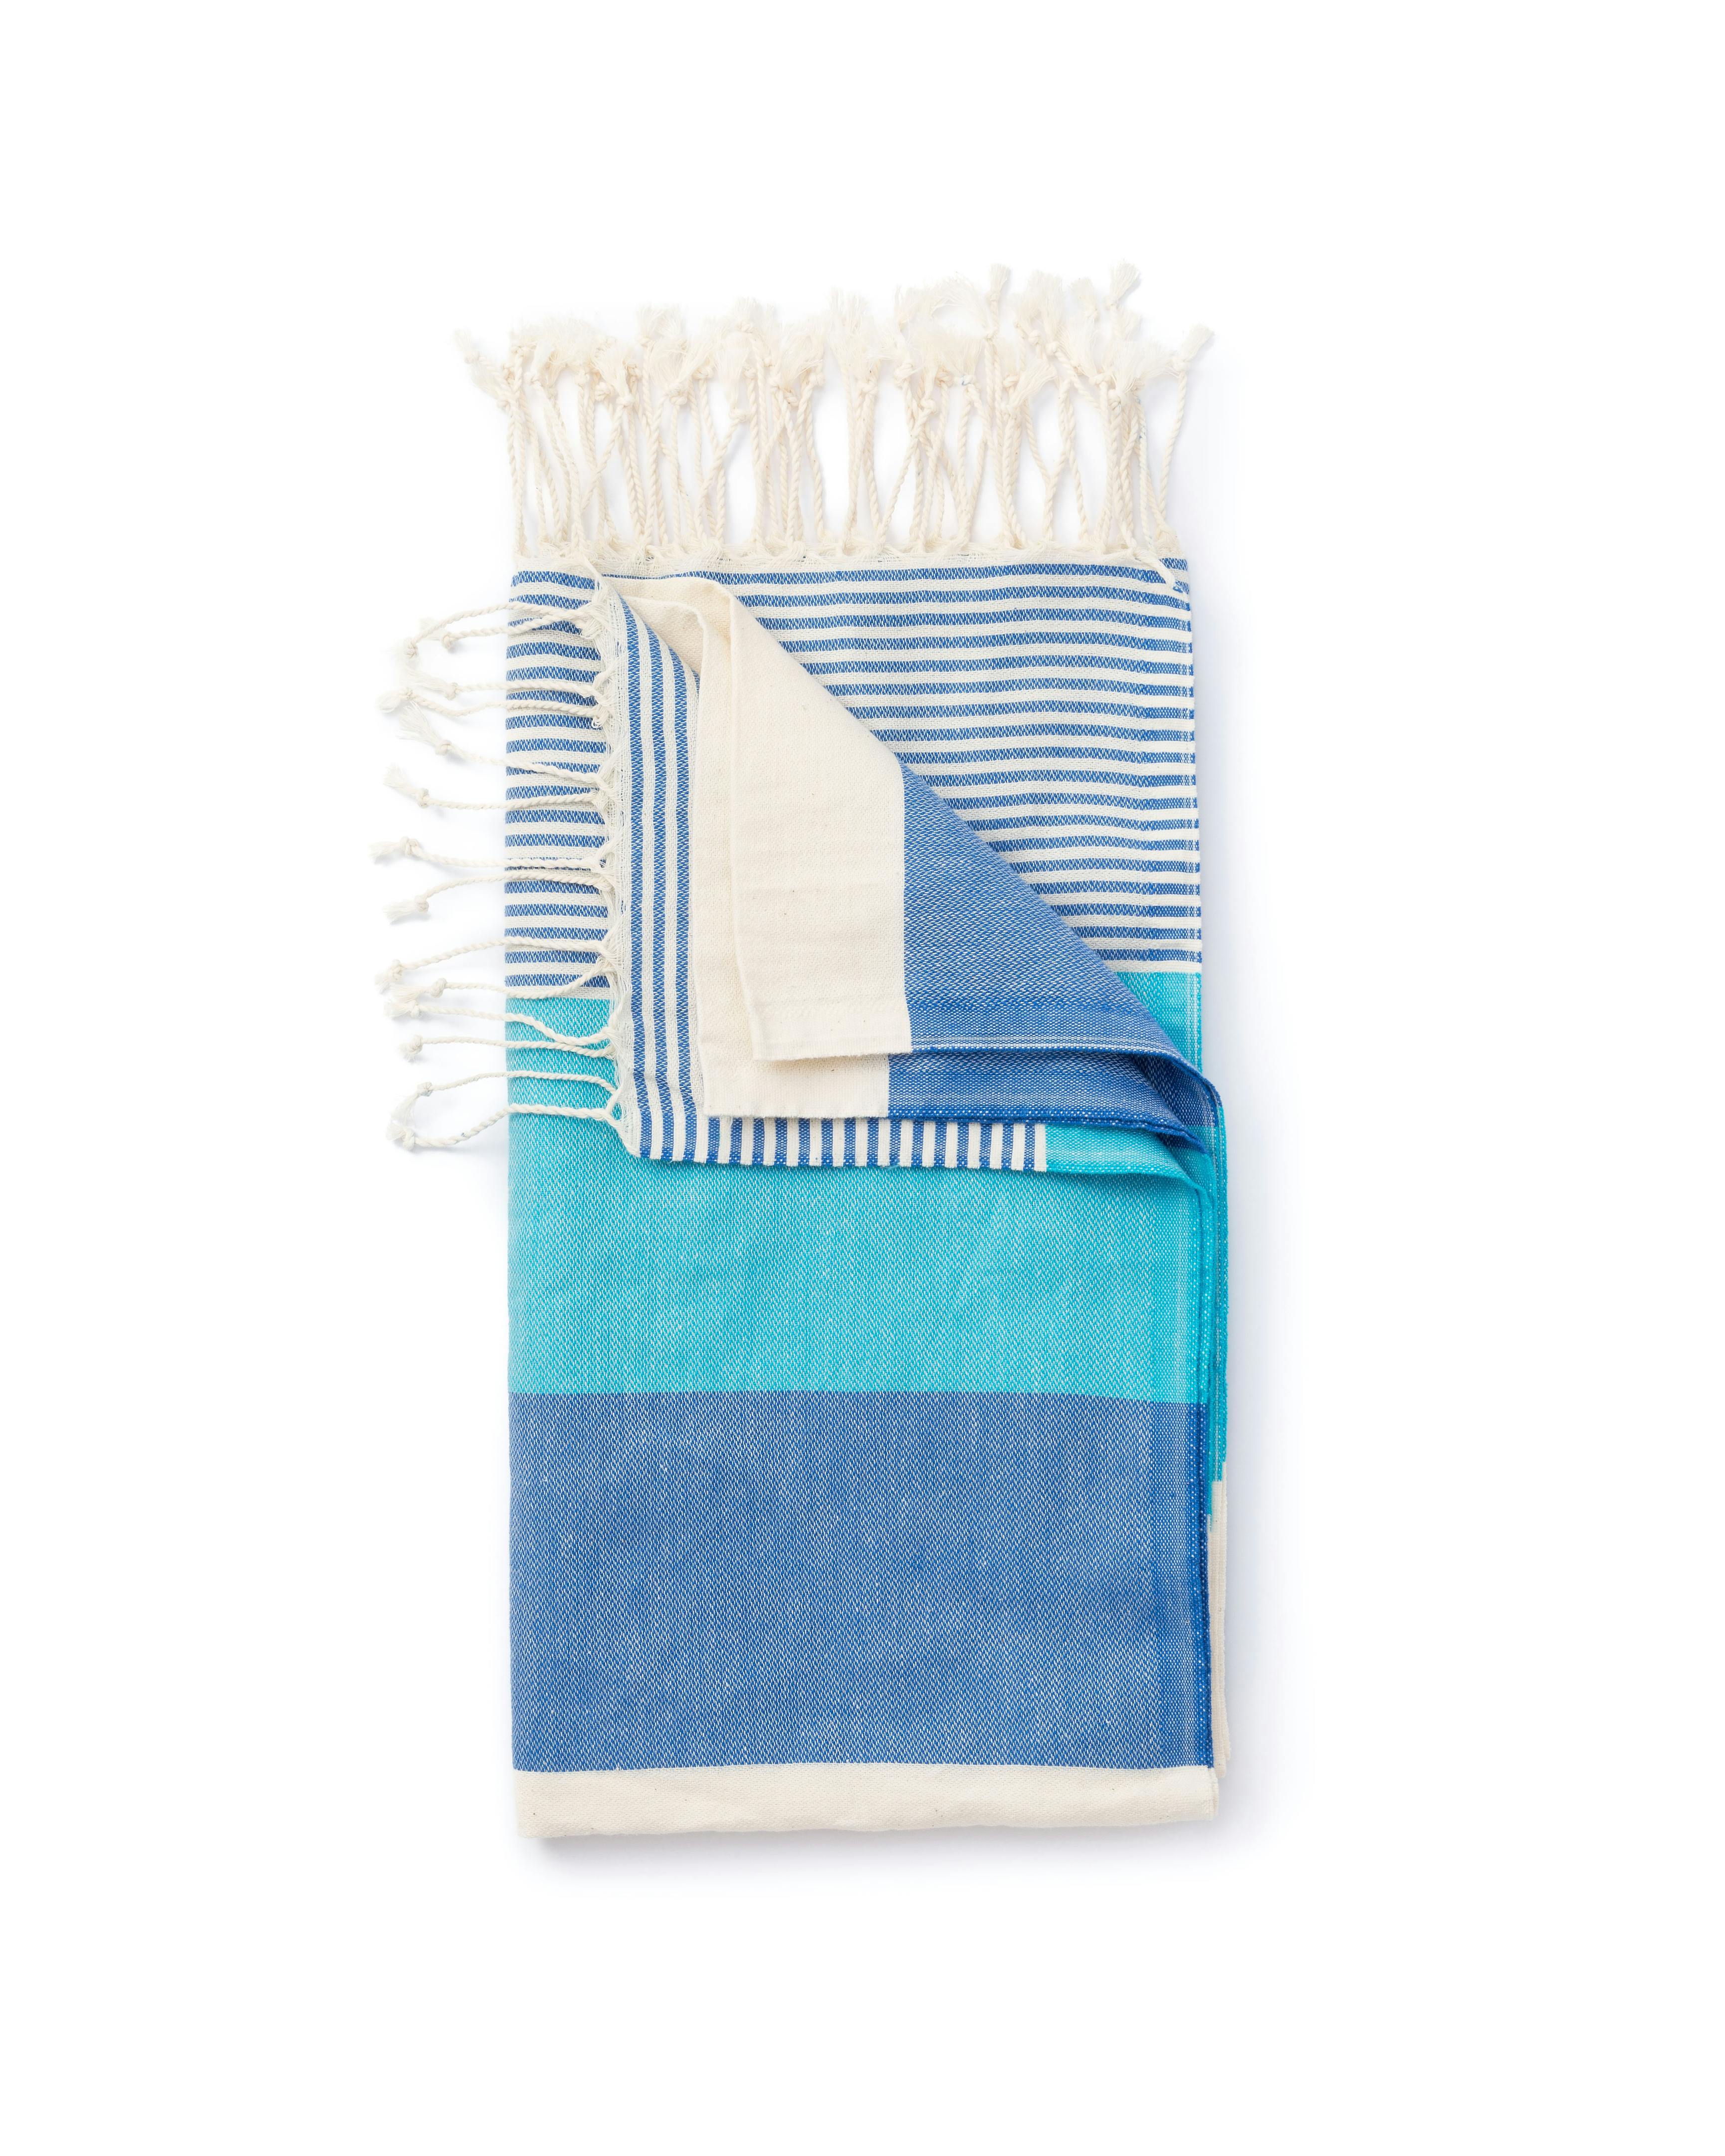 Turkish Towels Mediterranean Turkish Towel - Turquoise/ Blue